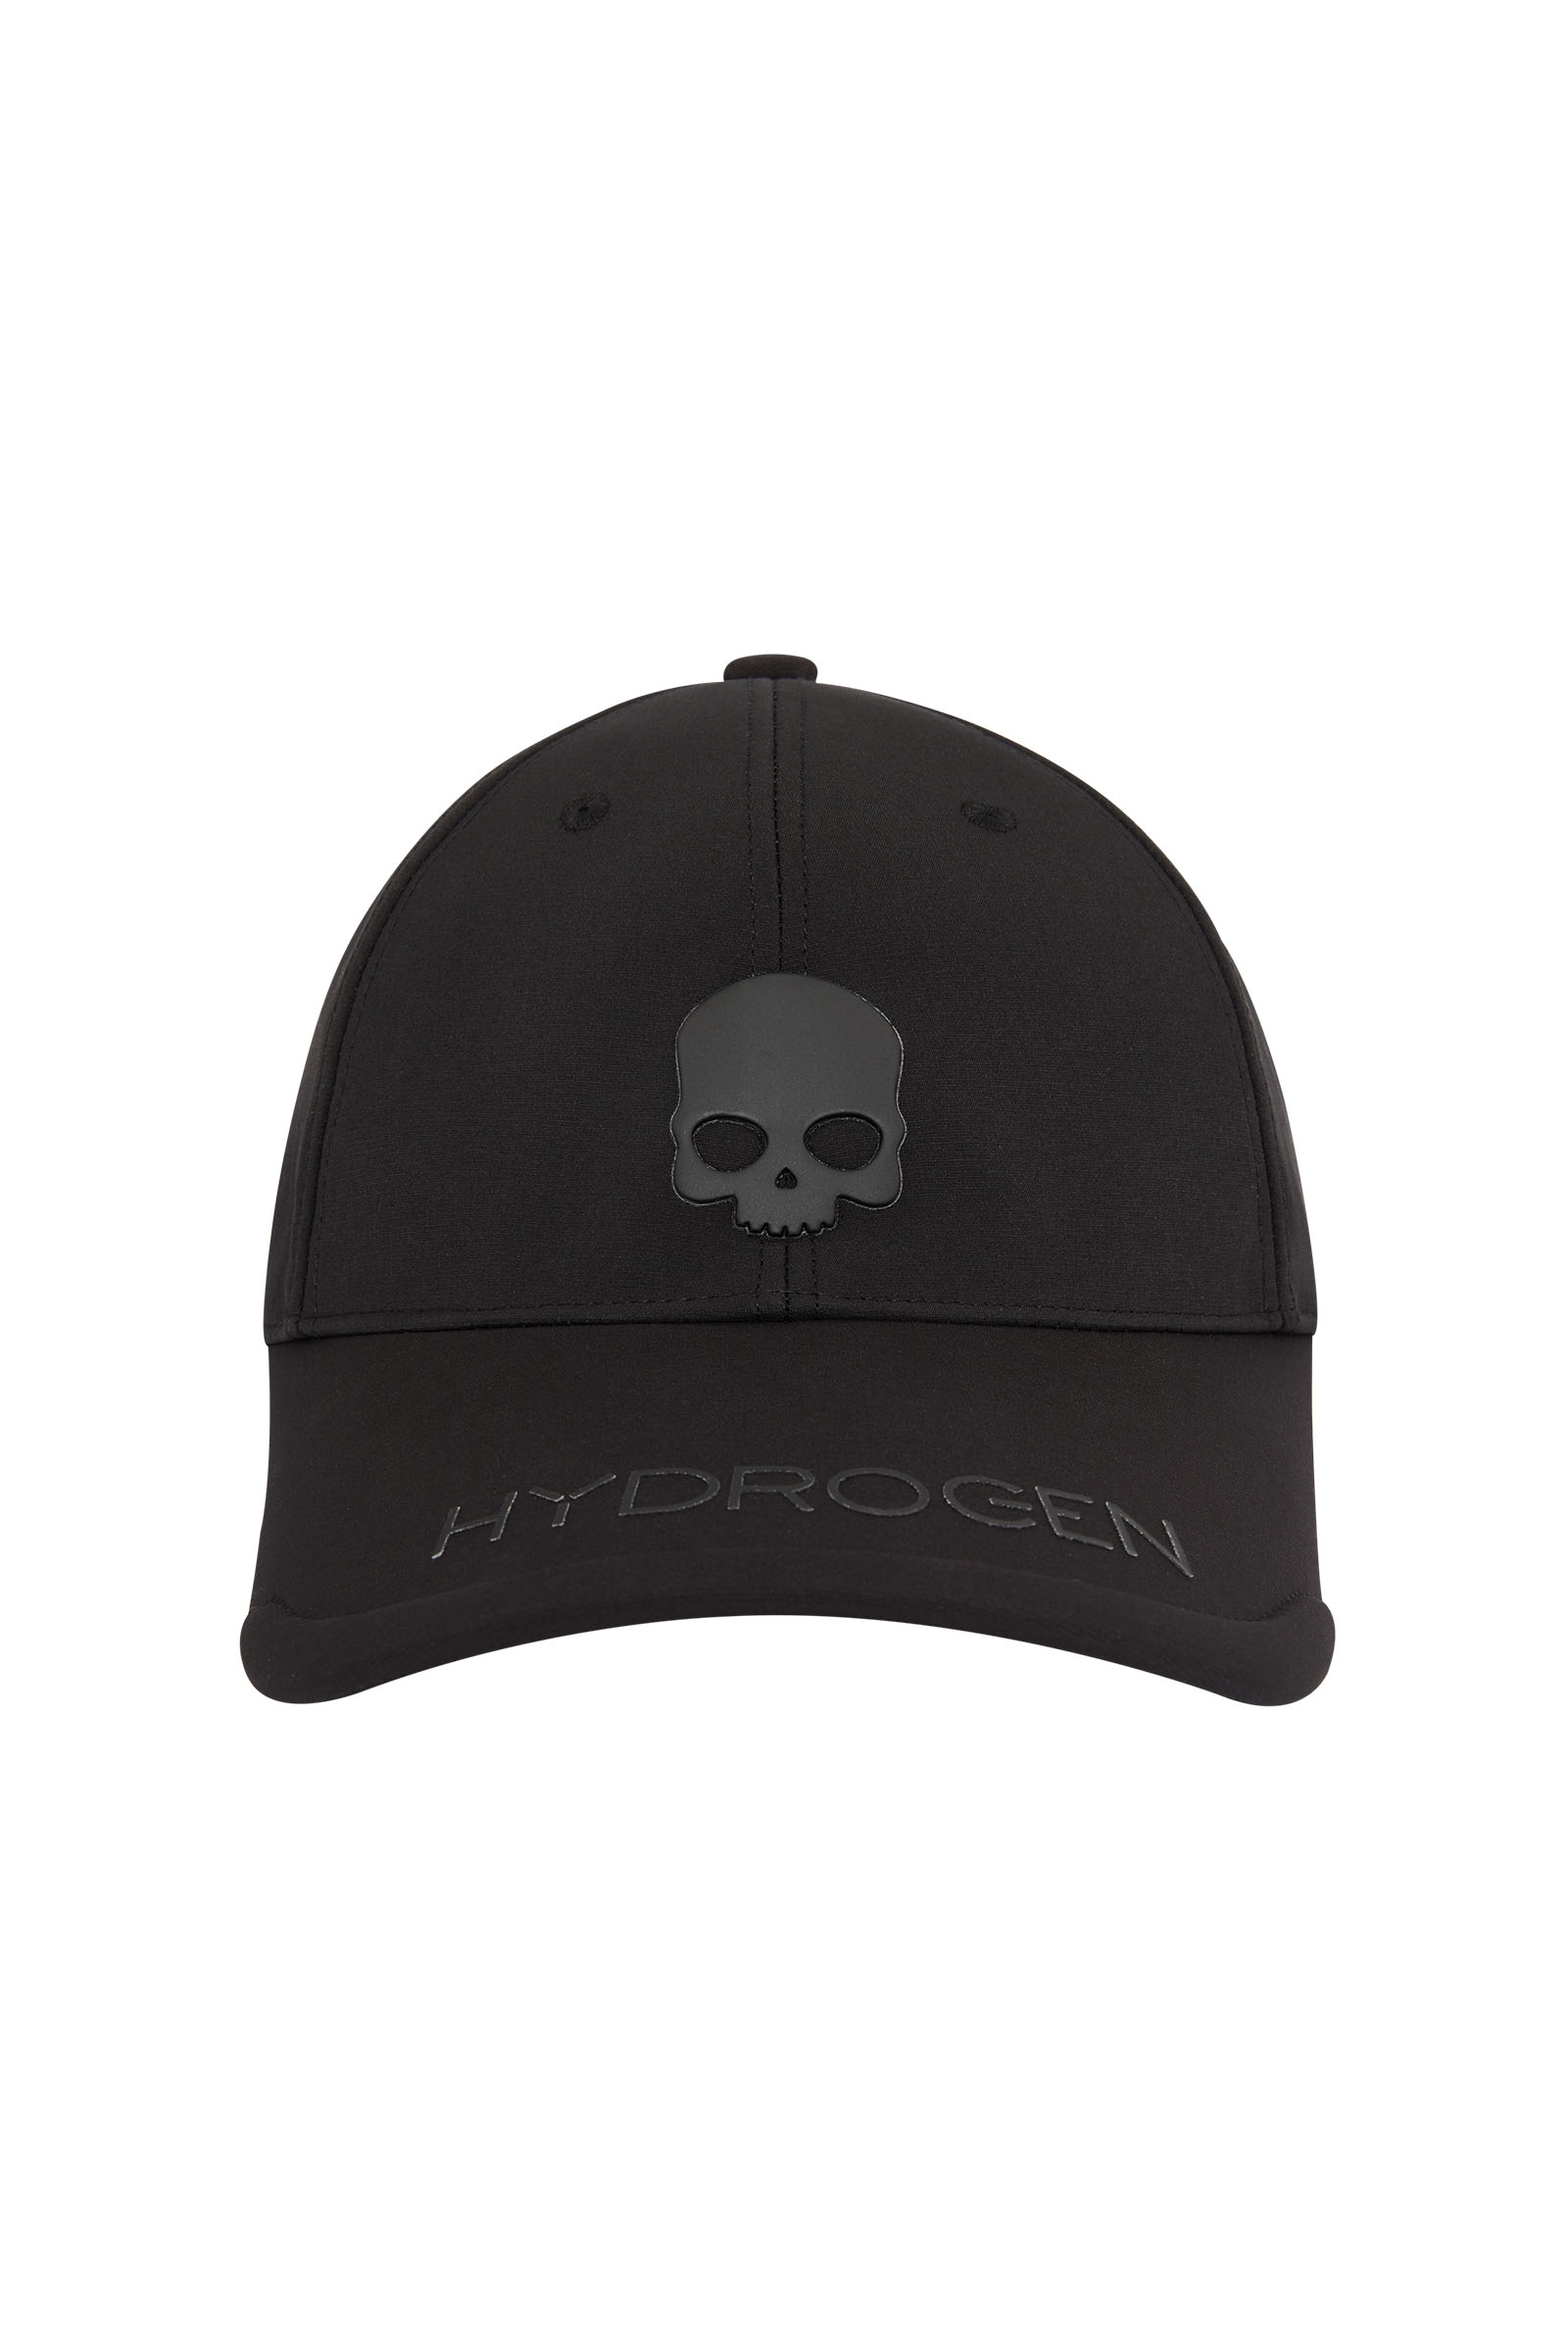 UNISEX BALL CAP - Accessories - Hydrogen - Luxury Sportwear